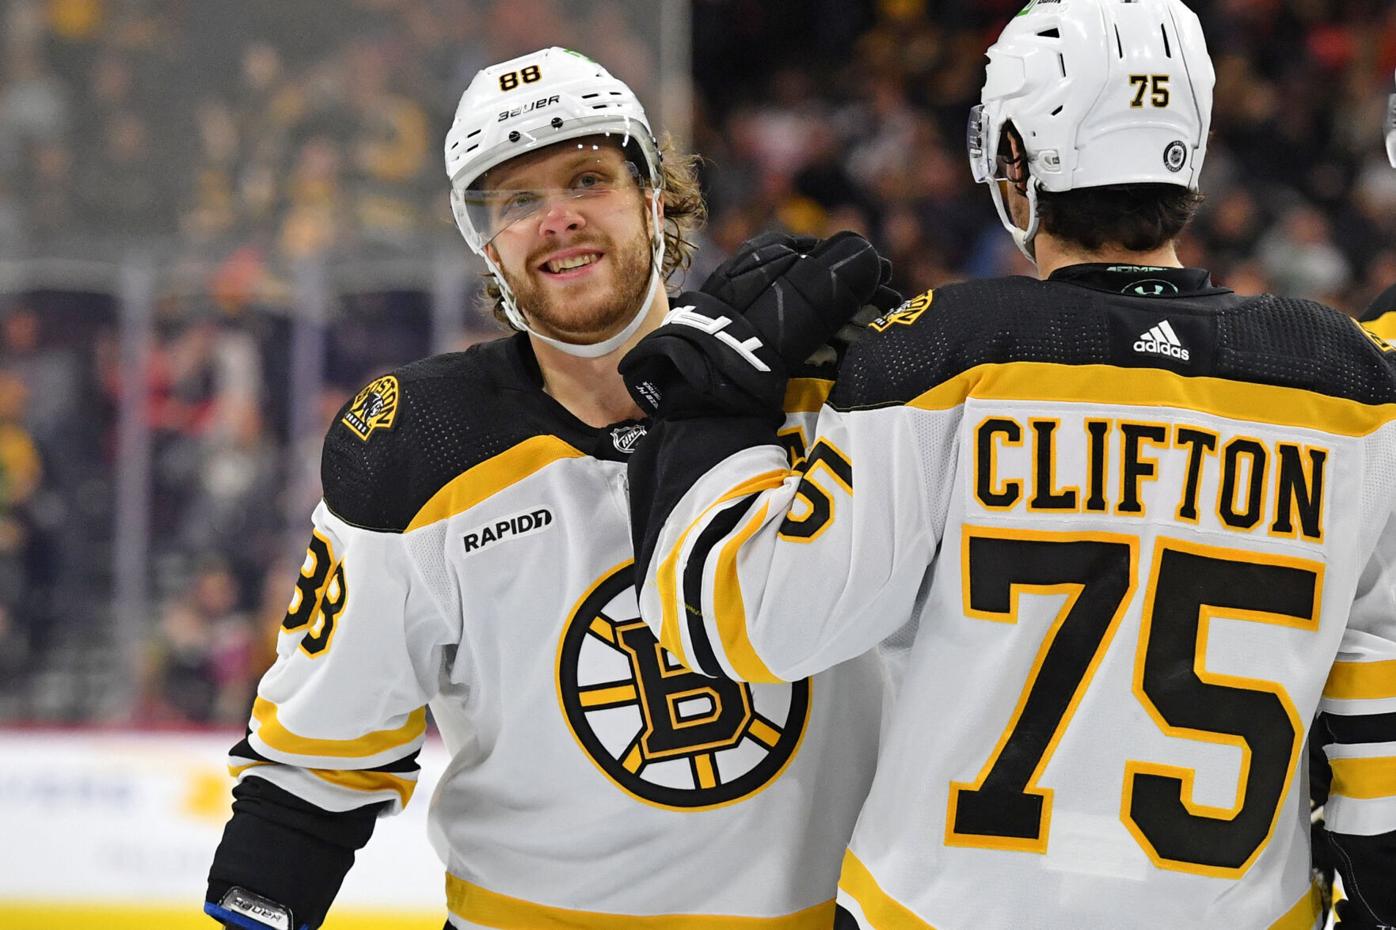 NHL's Boston Bruins sign Boston College hockey player from Billerca